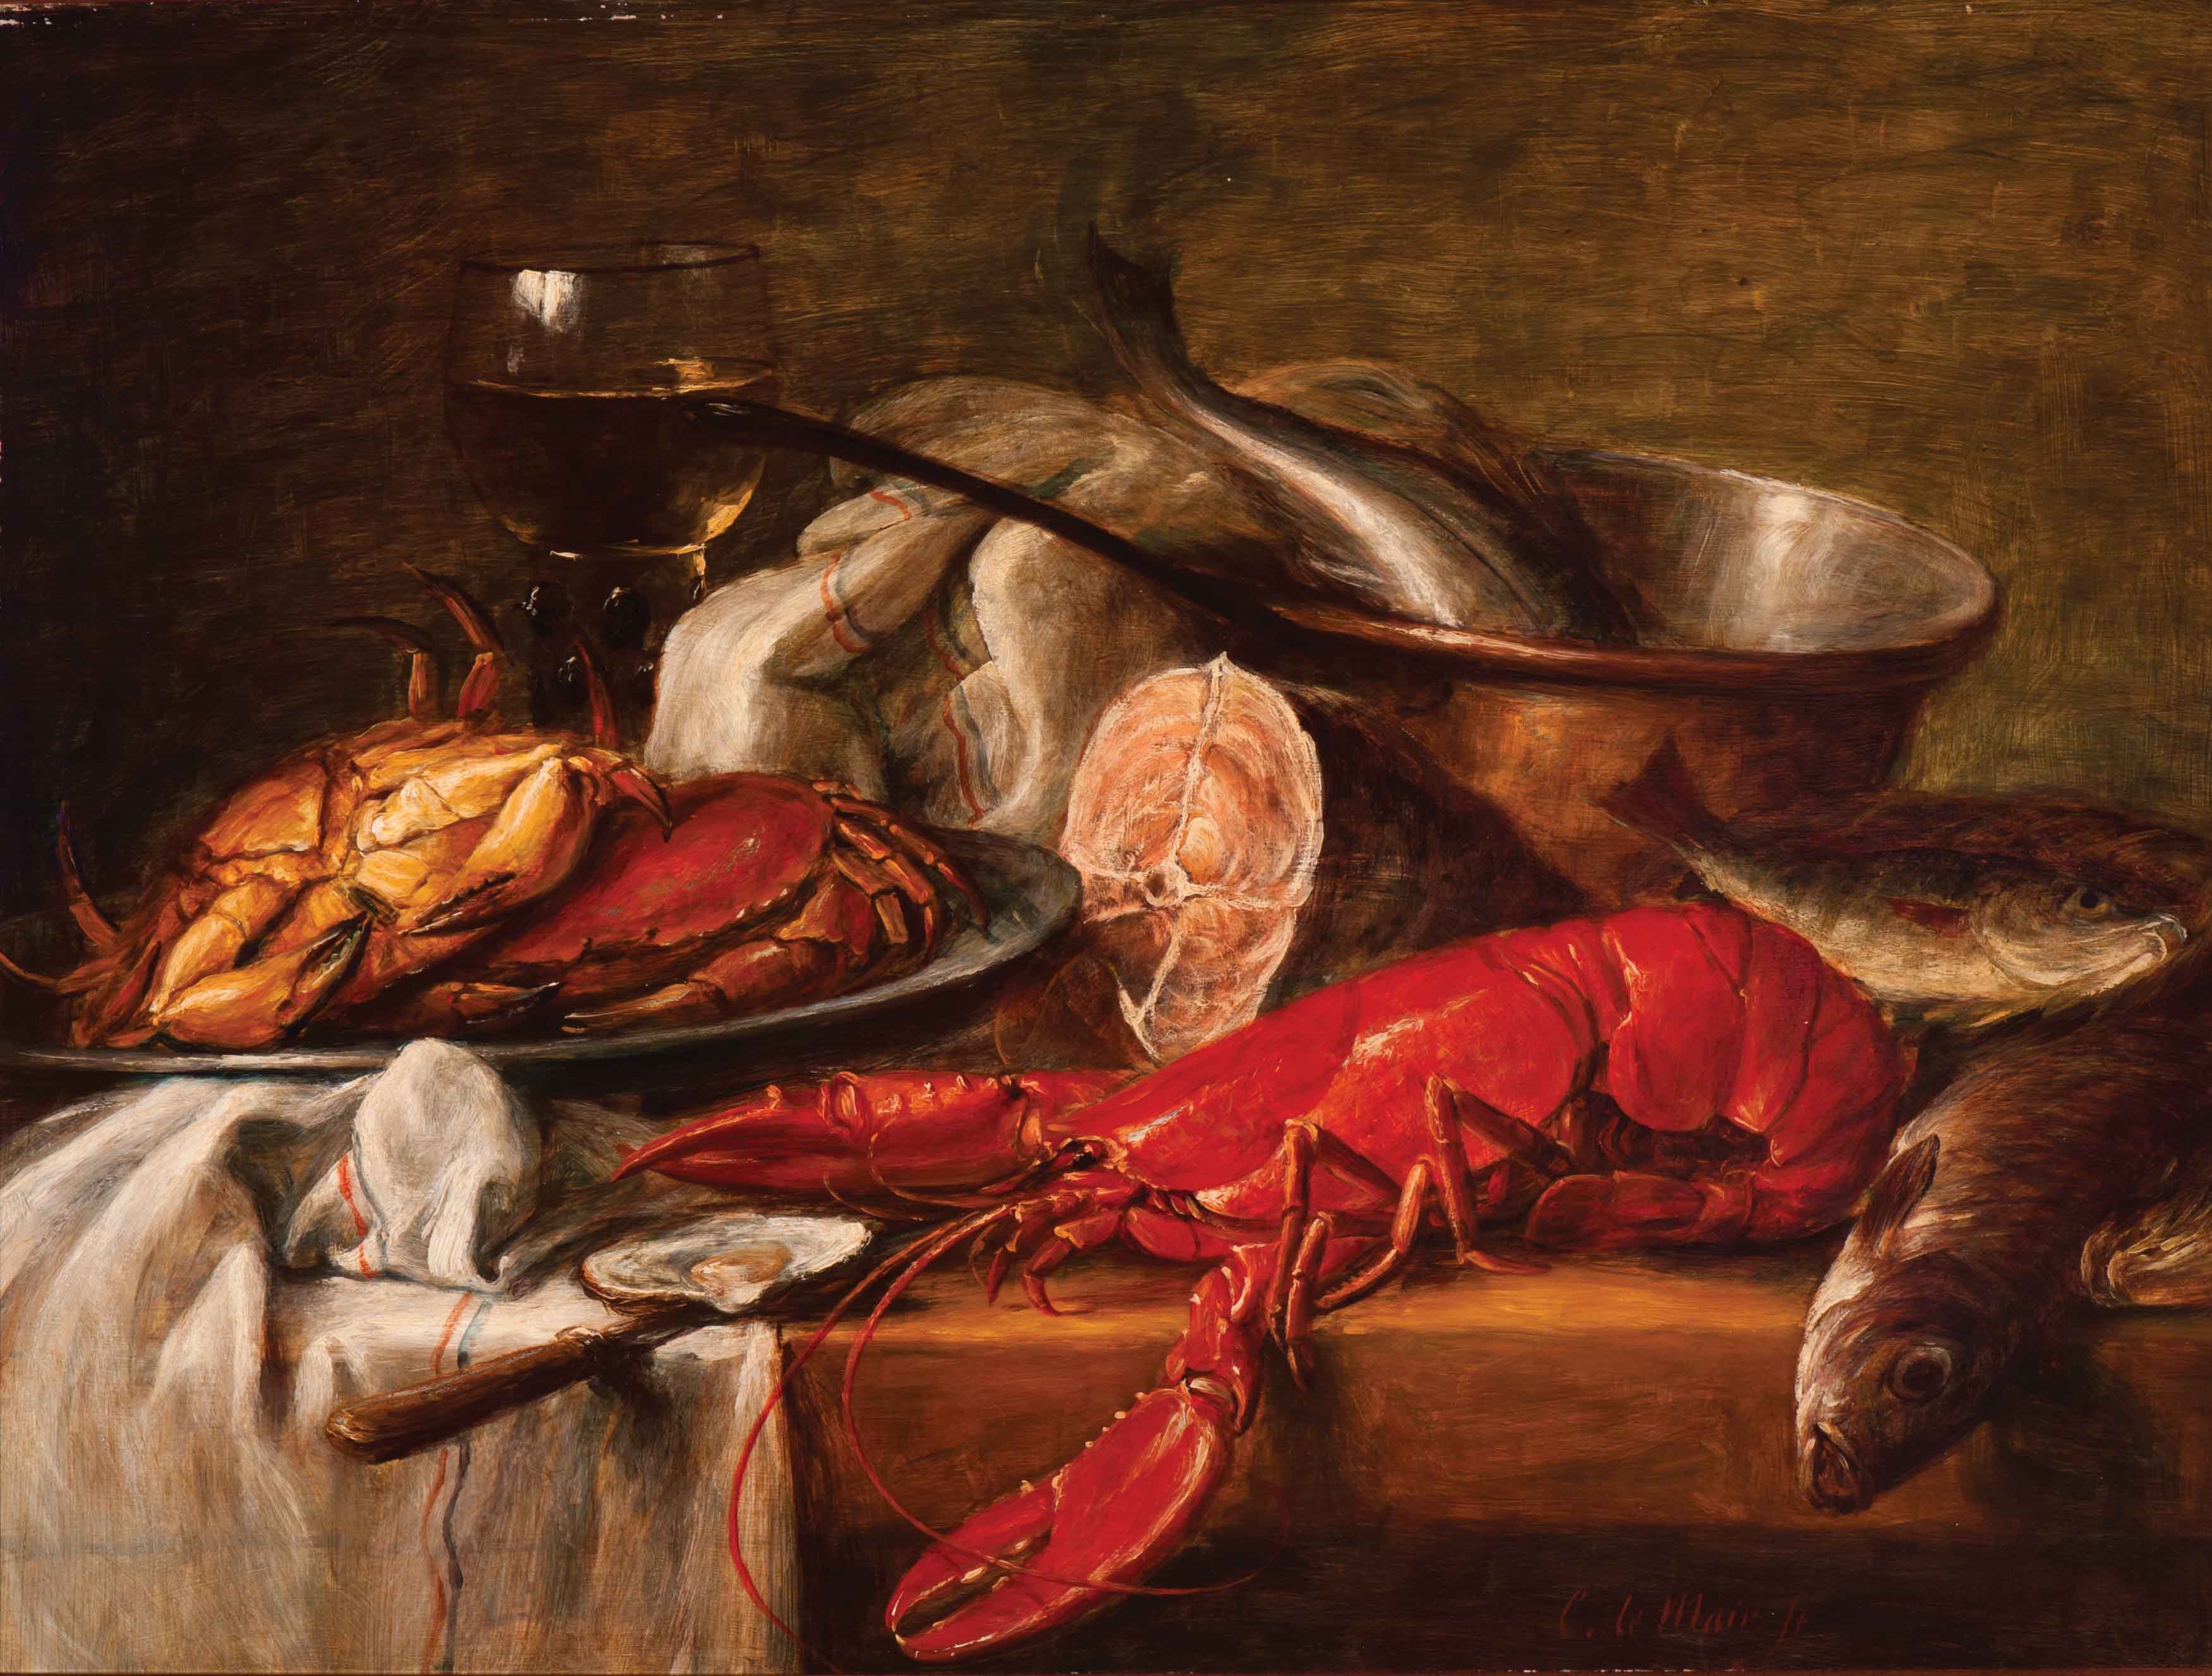 Artwork by Cornelis le Mair, Stilleven met vis en schaaldieren, Made of board